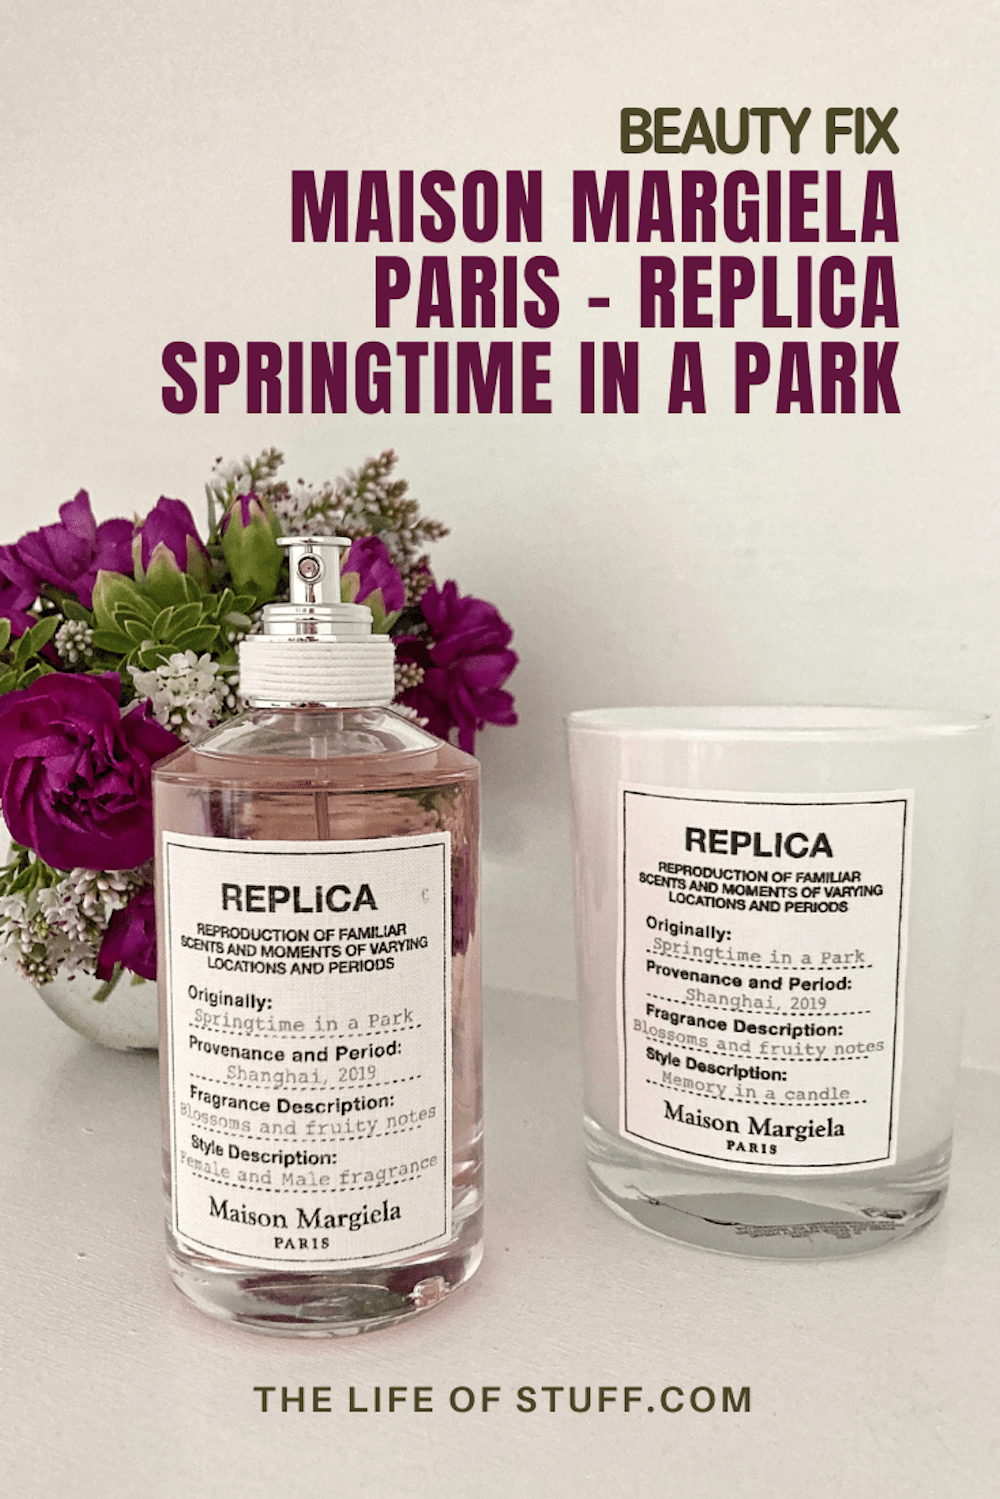 Beauty Fix - Maison Margiela Paris - REPLICA Springtime in a Park - The Life of Stuff